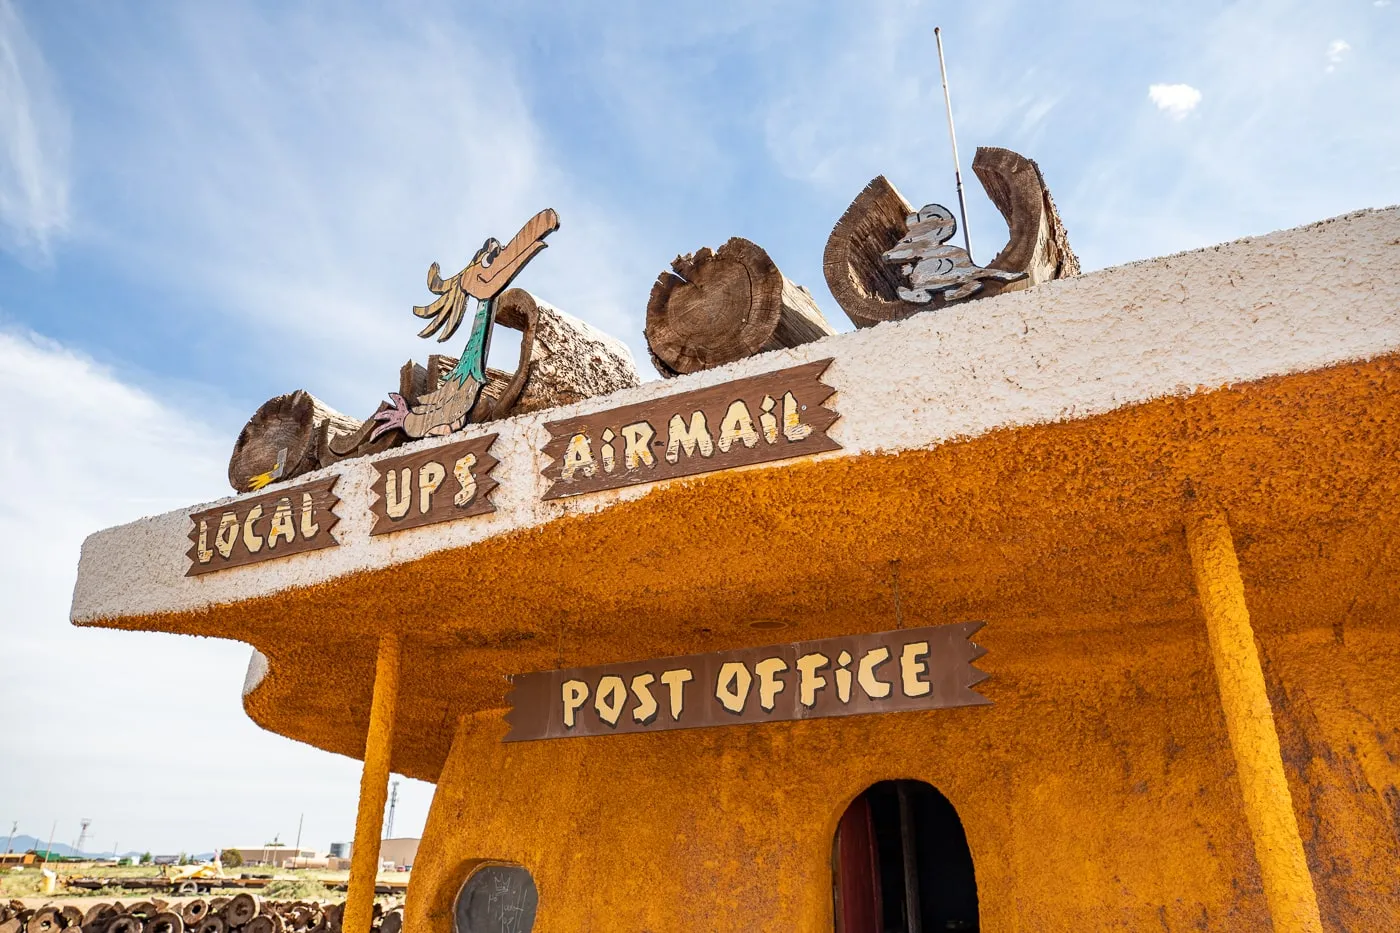 Bedrock Post Office at Flintstones Bedrock City in Williams, Arizona